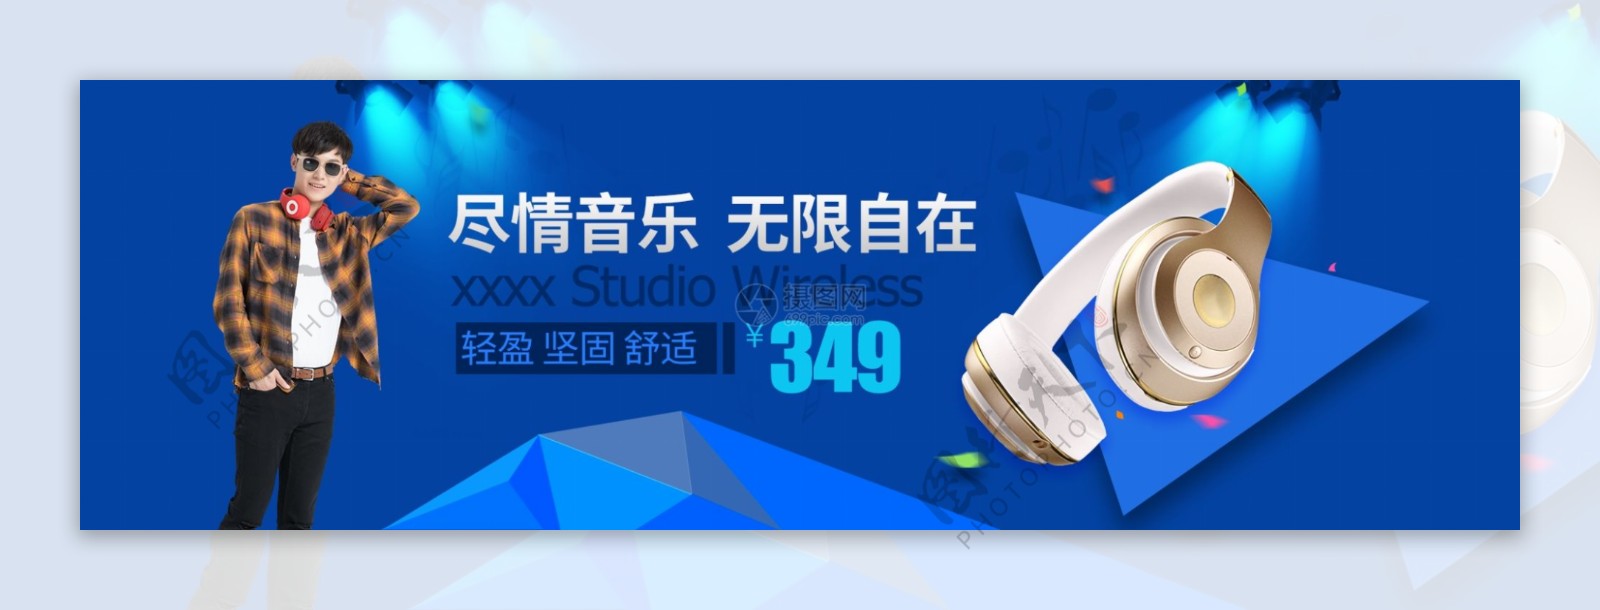 数码产品耳机淘宝banner